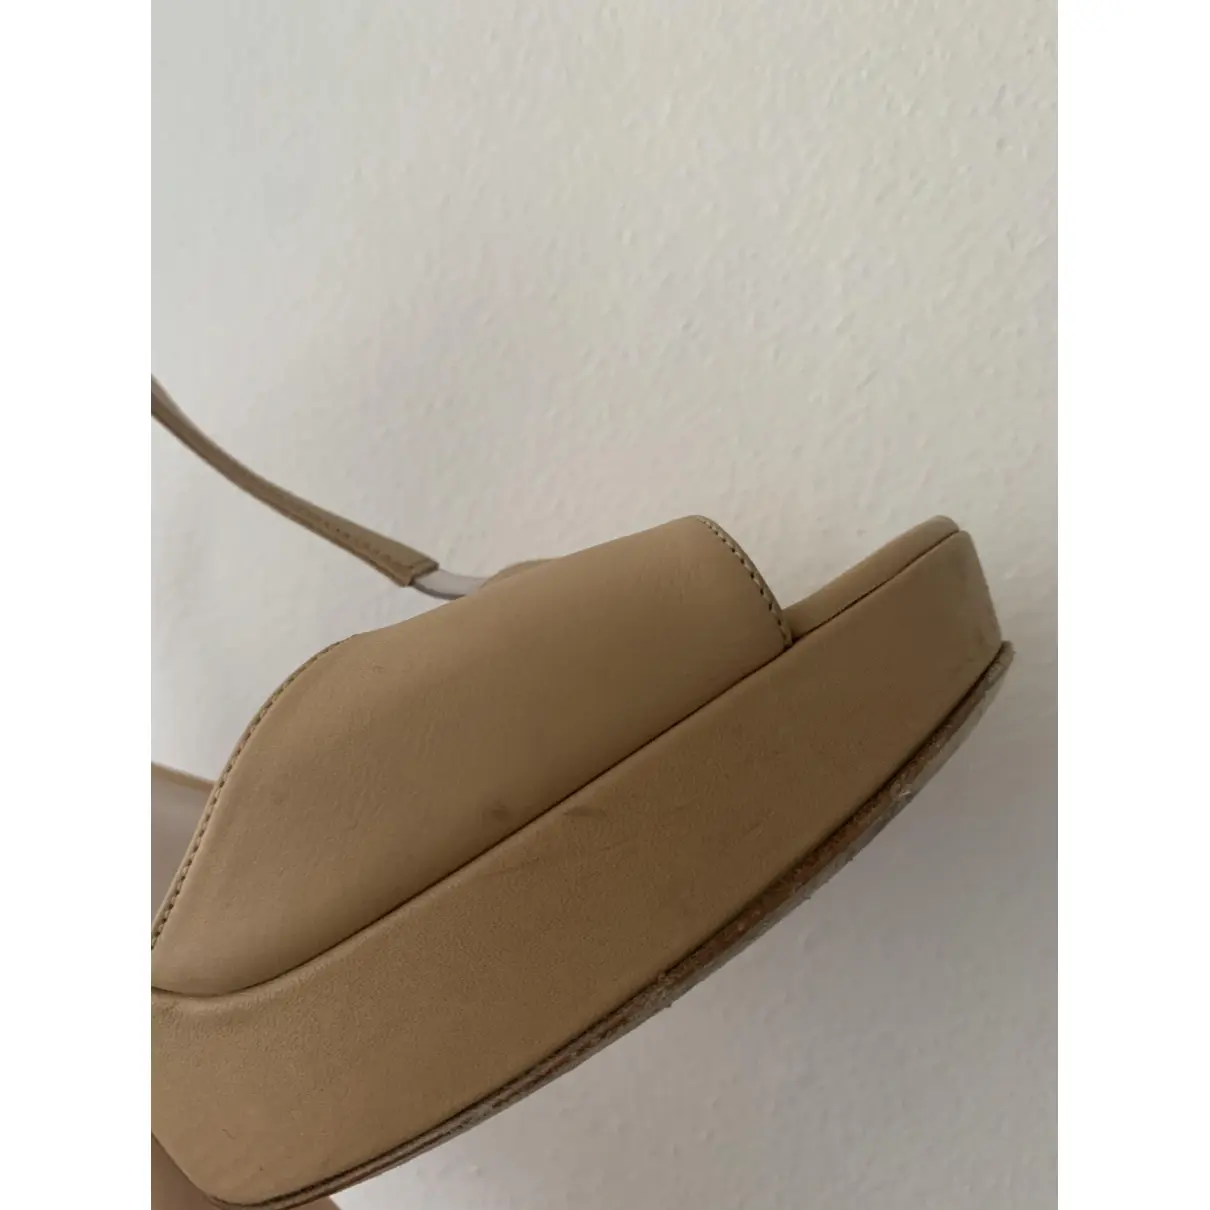 Buy Aperlai Leather sandals online